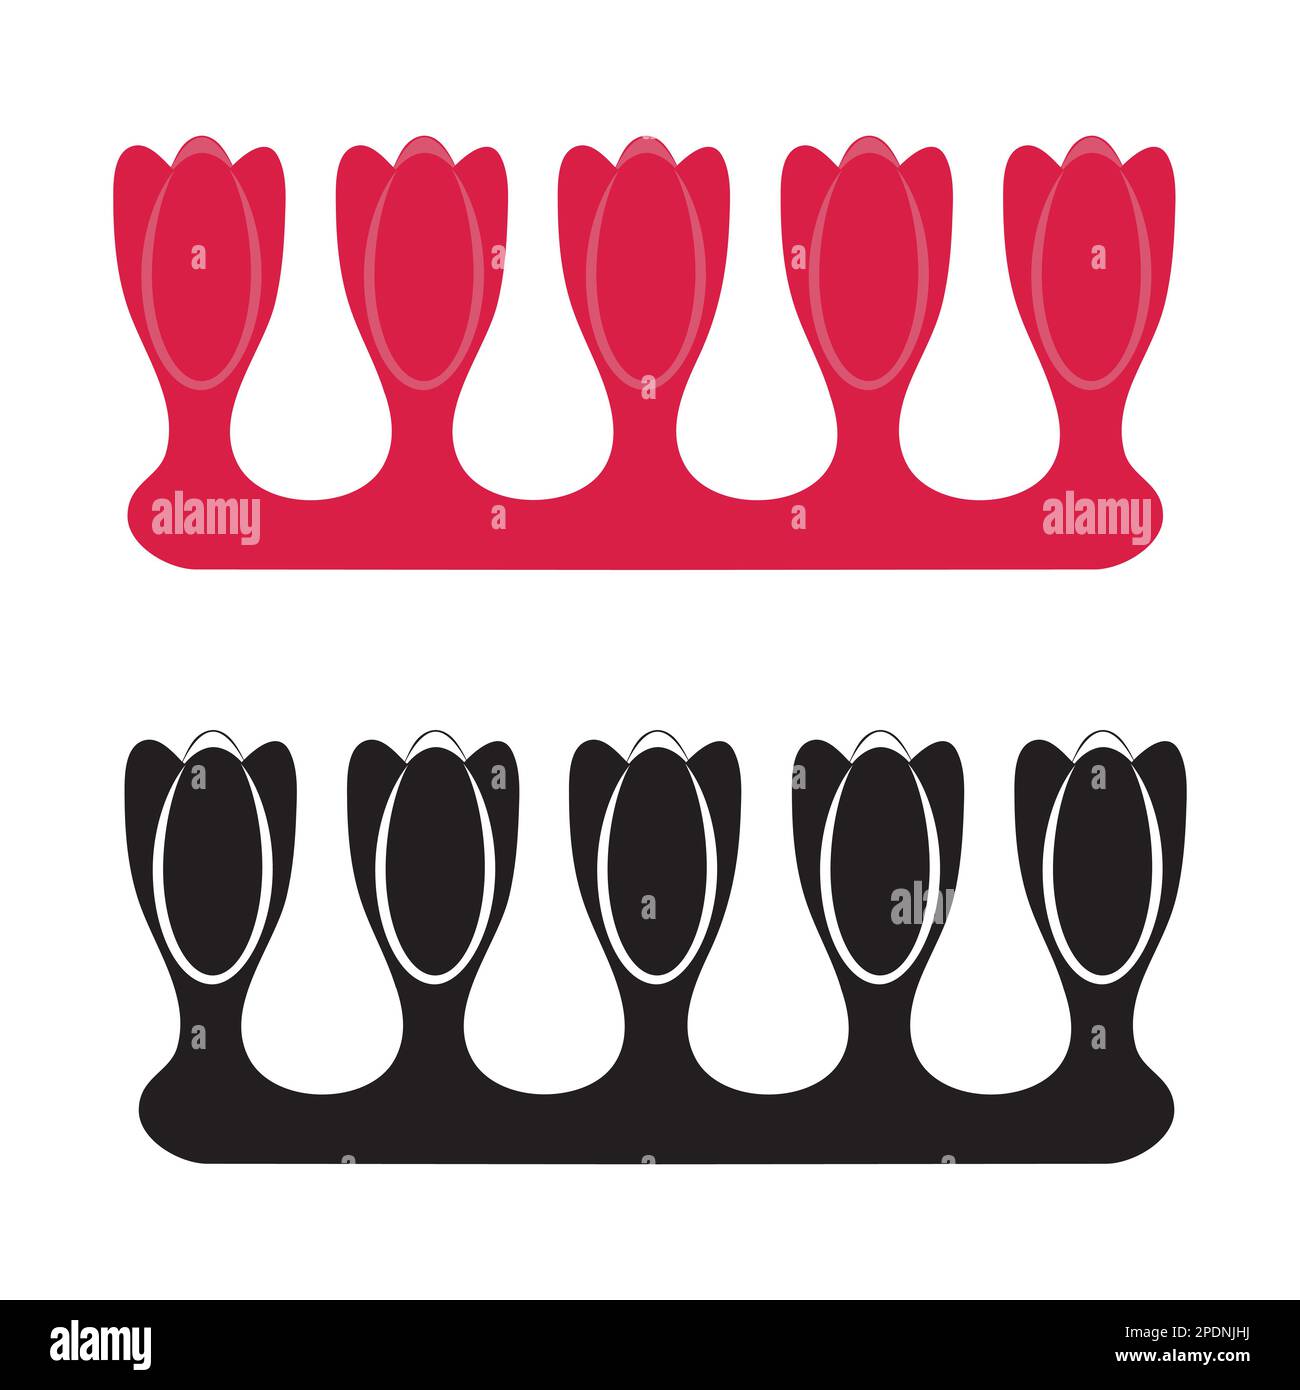 Nail polish pedicure toe separators, vector illustration Stock Vector ...